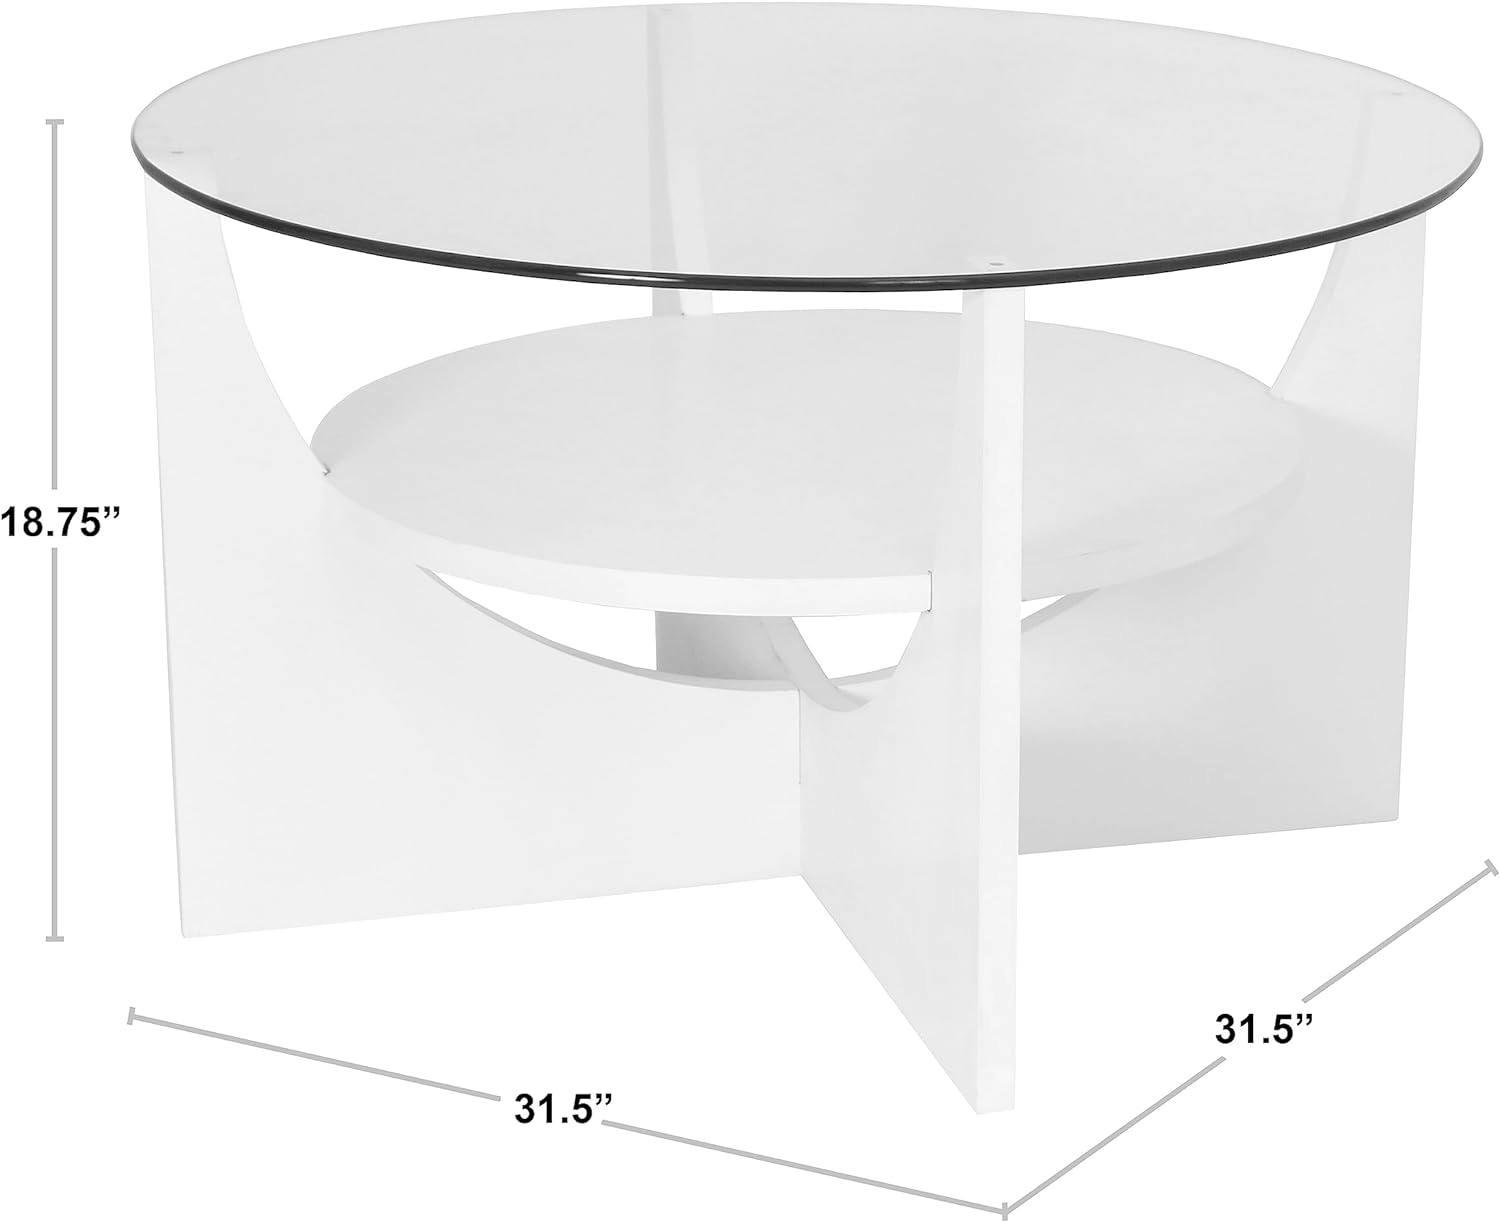 34" Circular Black Wood & Clear Glass Coffee Table with Storage Shelf